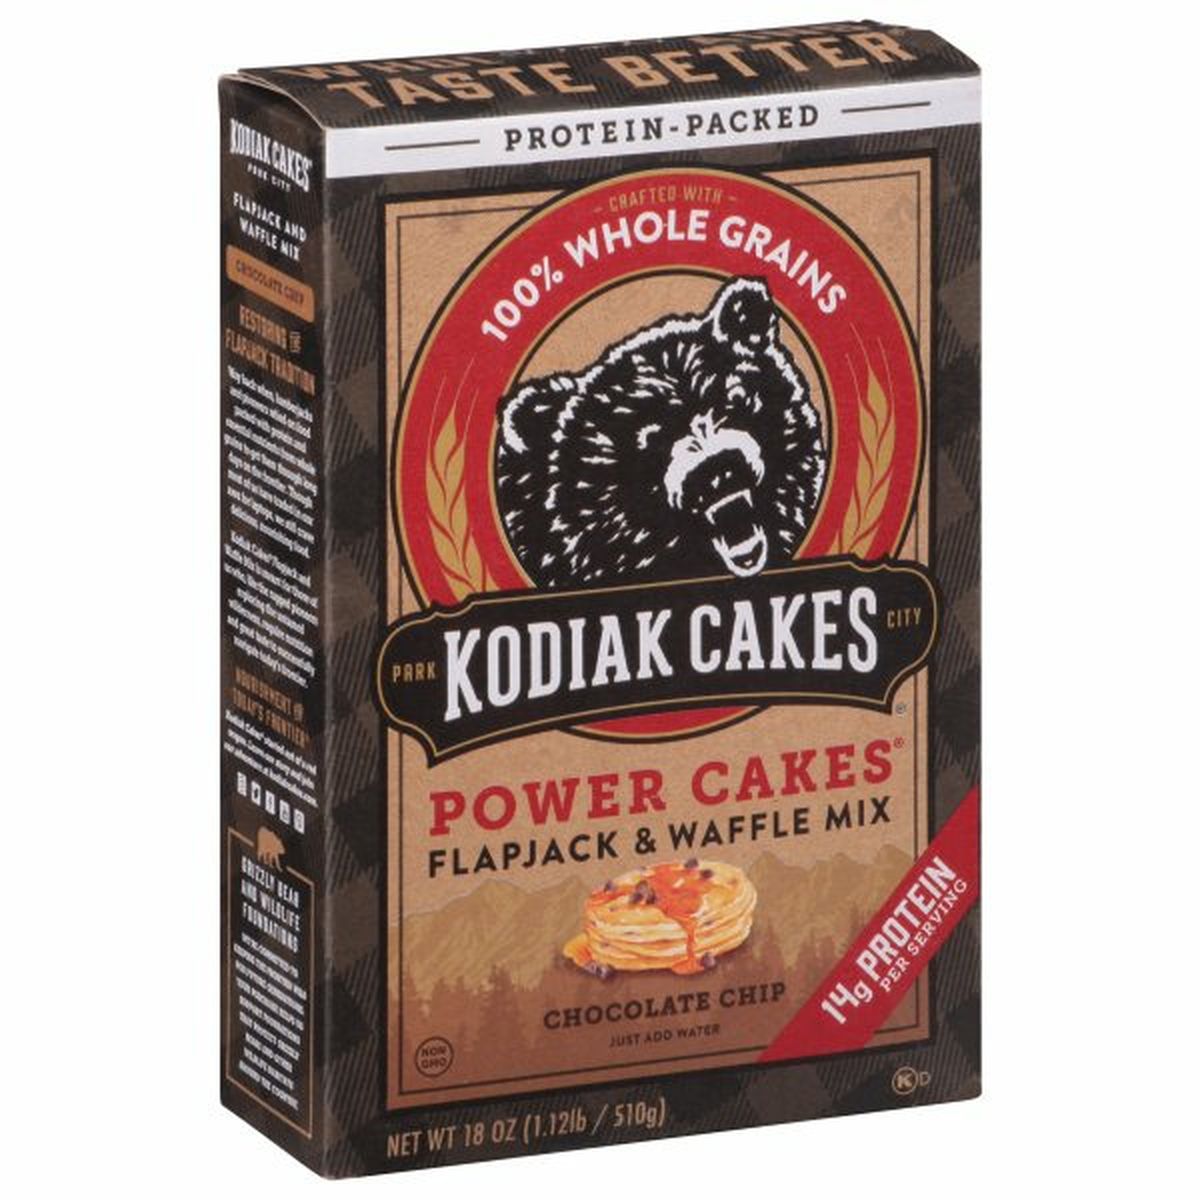 Calories in Kodiak Cakes Power Cakes Flapjack & Waffle Mix, Chocolate Chip